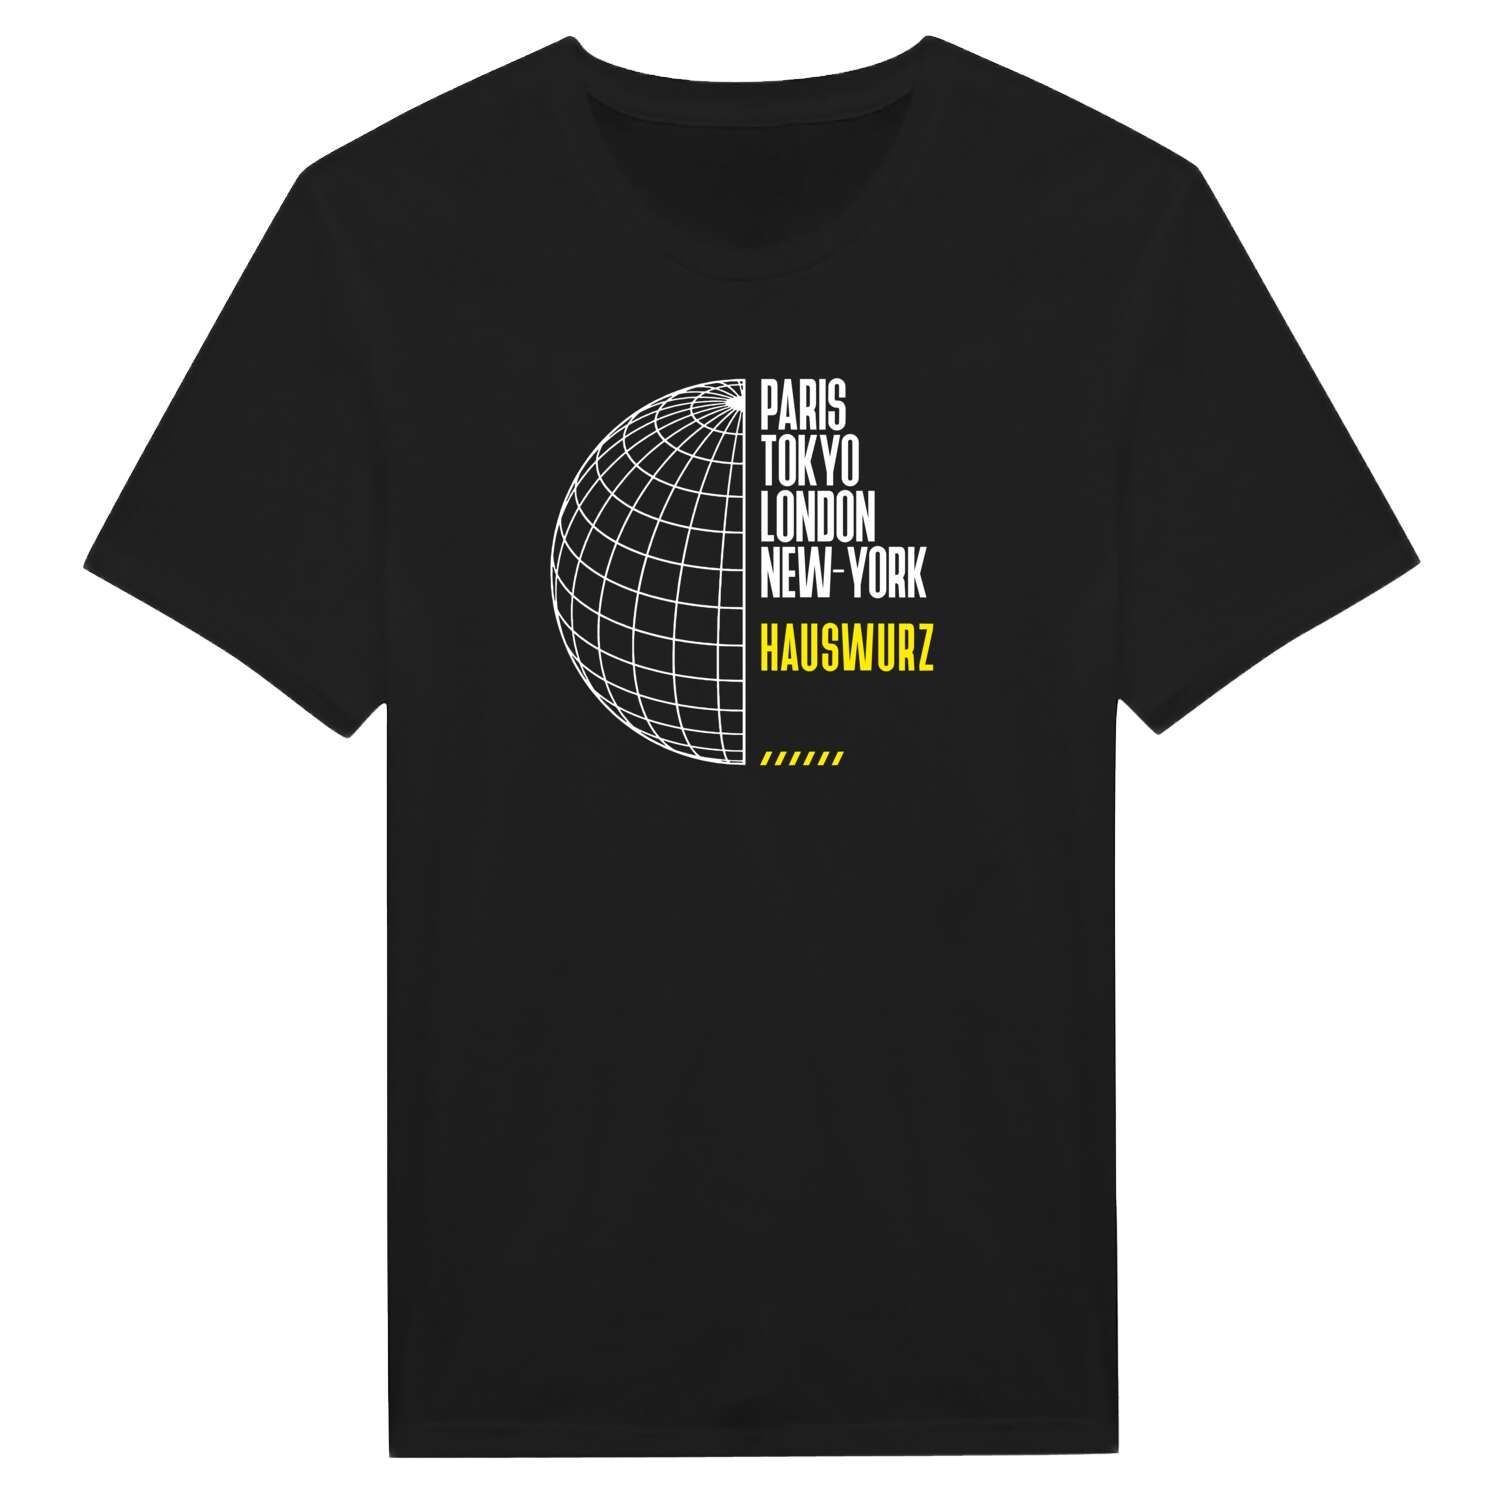 Hauswurz T-Shirt »Paris Tokyo London«